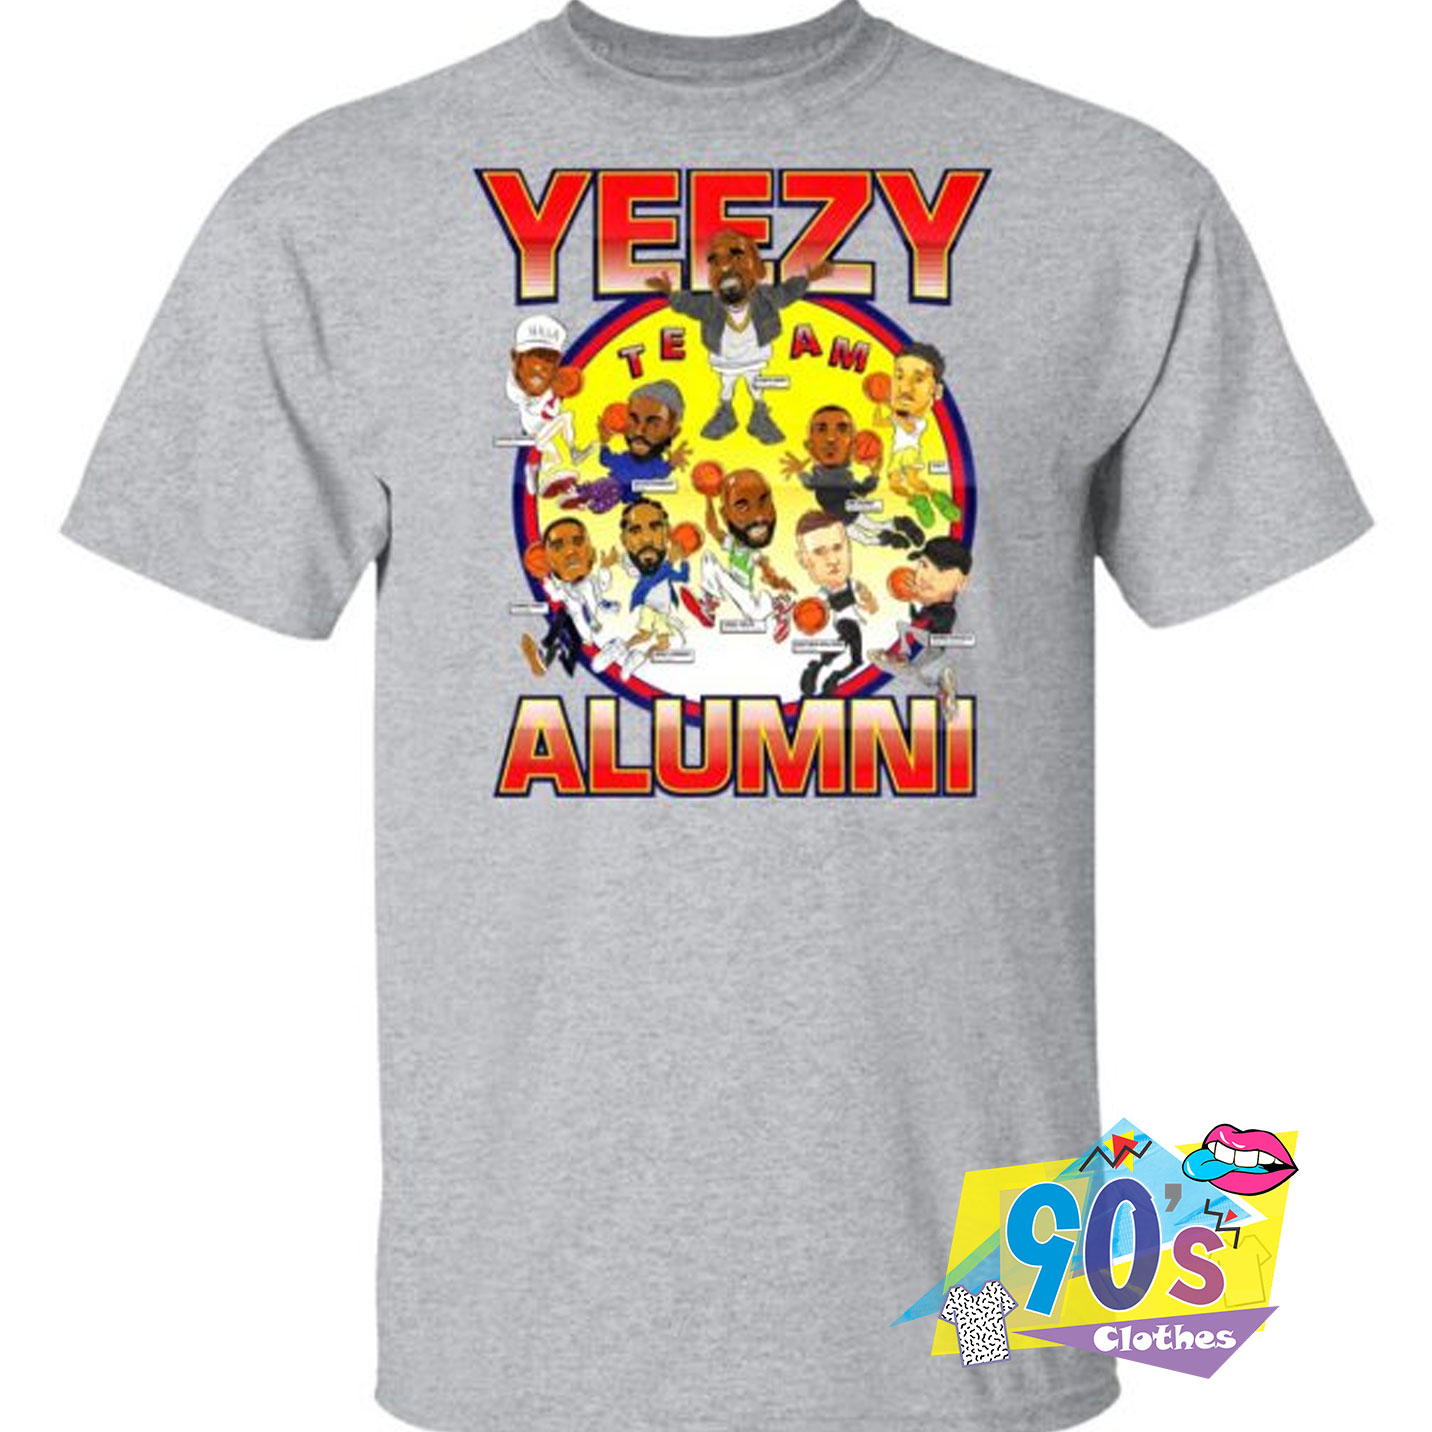 Tage en risiko Konkurrere fleksibel Vintage Yeezy Alumni T Shirt On Sale - 90sclothes.com